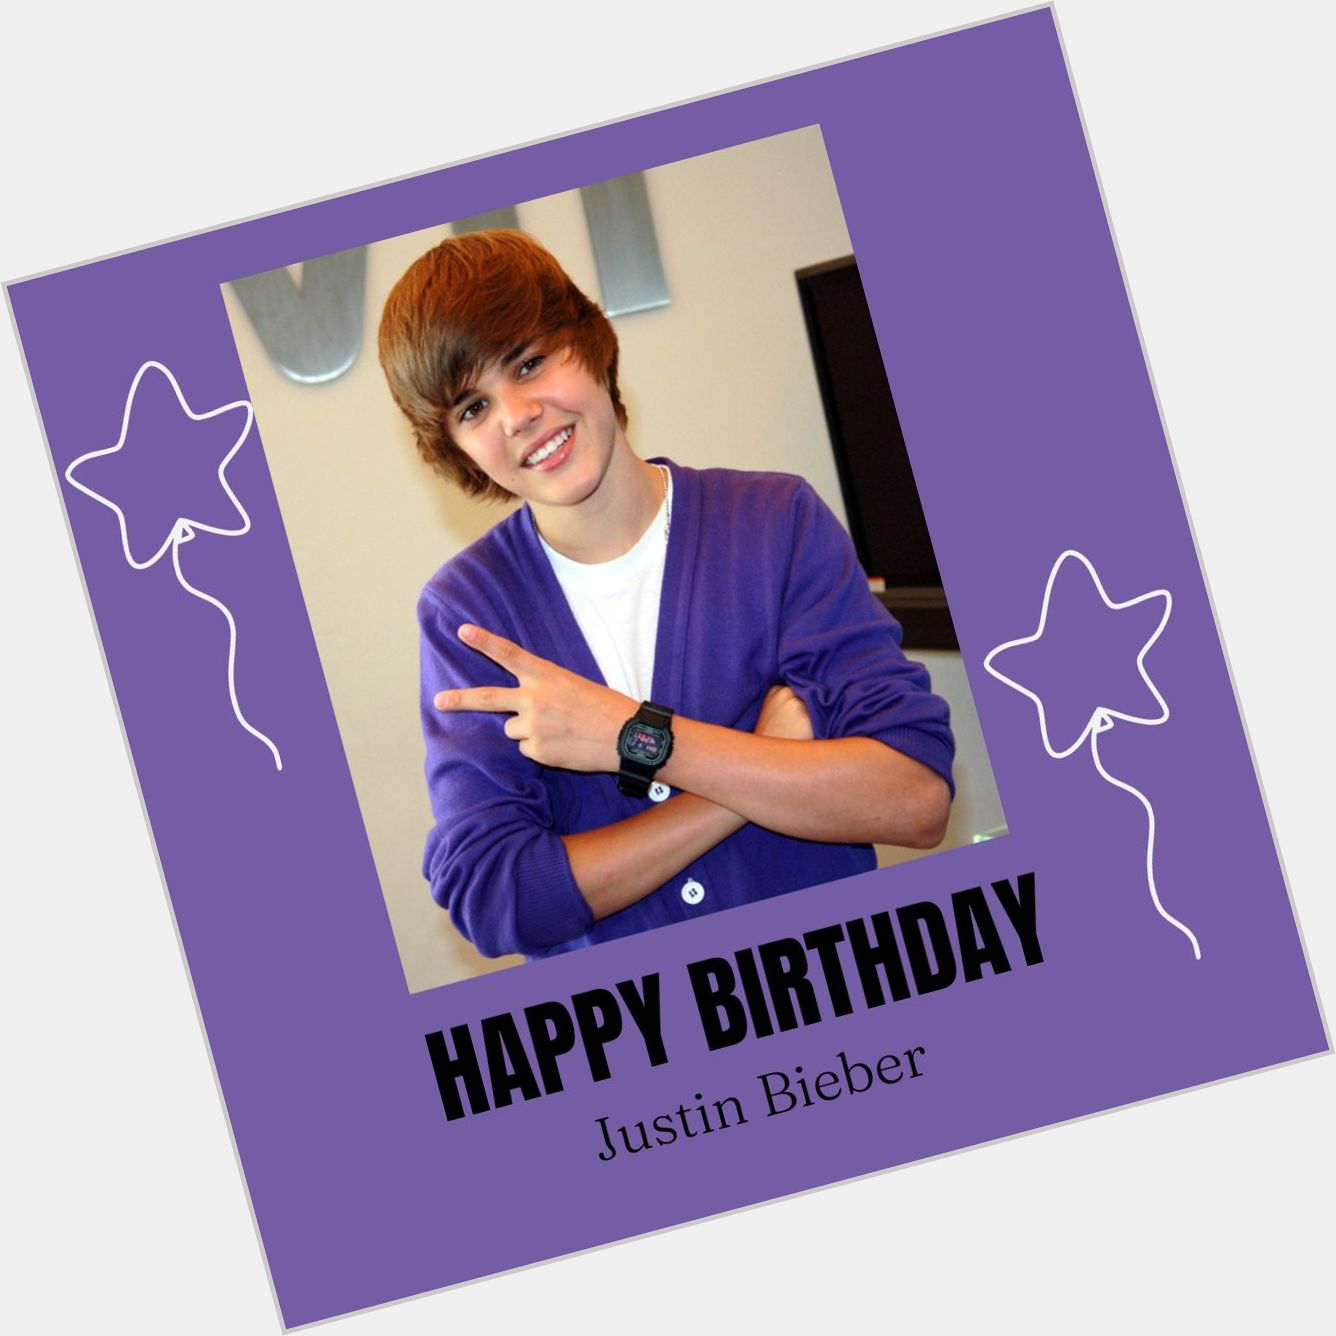  HAPPY BIRTHDAY! Justin Bieber turns 2 9 today. 